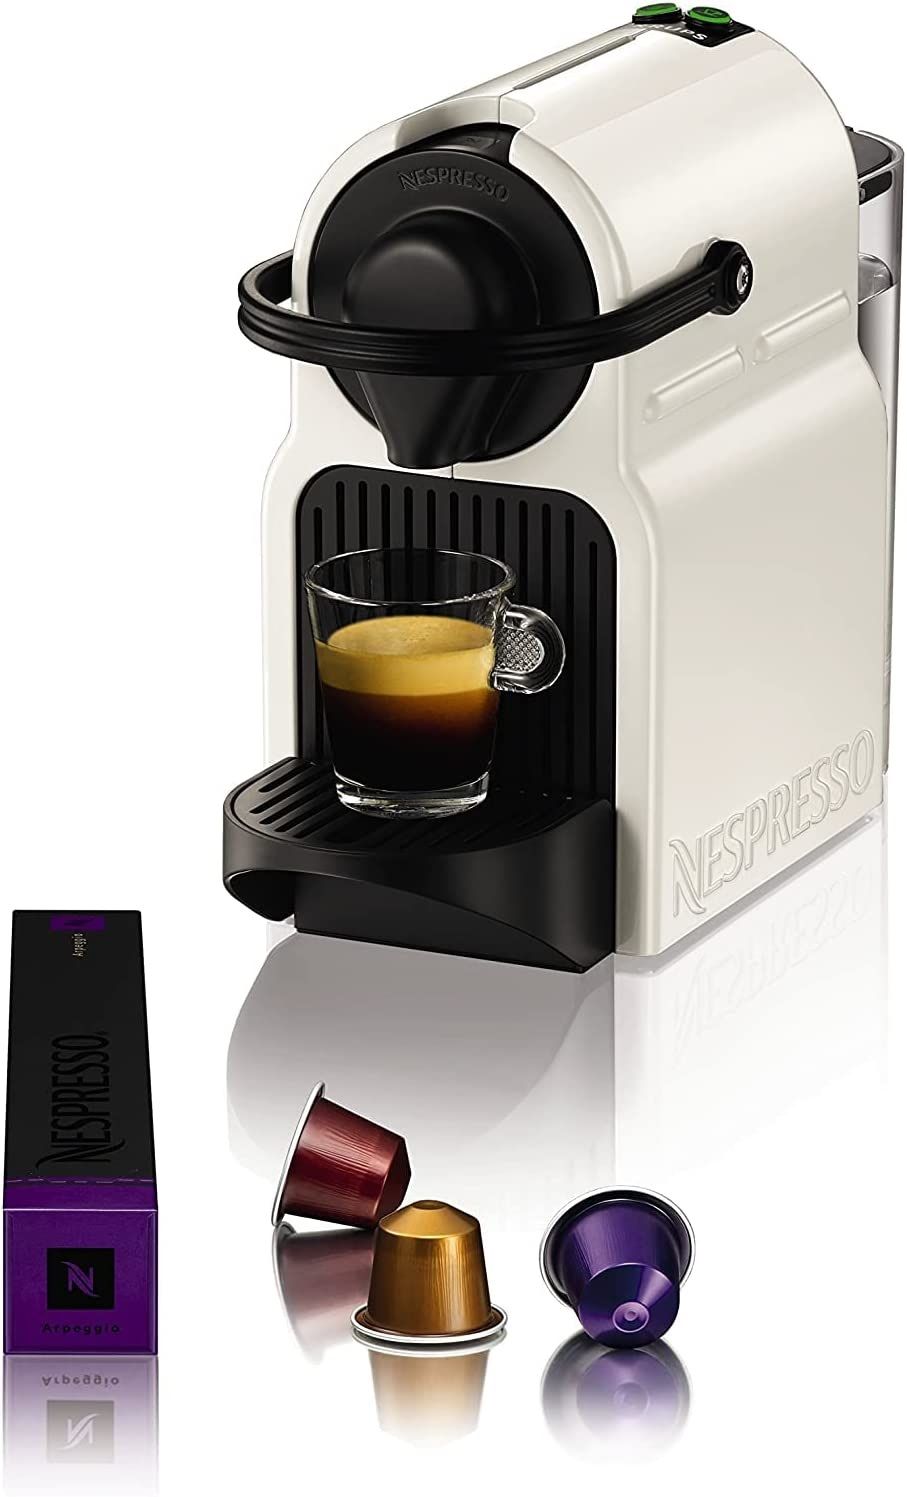 Krups / Nespresso essenza mini nera / Macchina per il caffè espresso